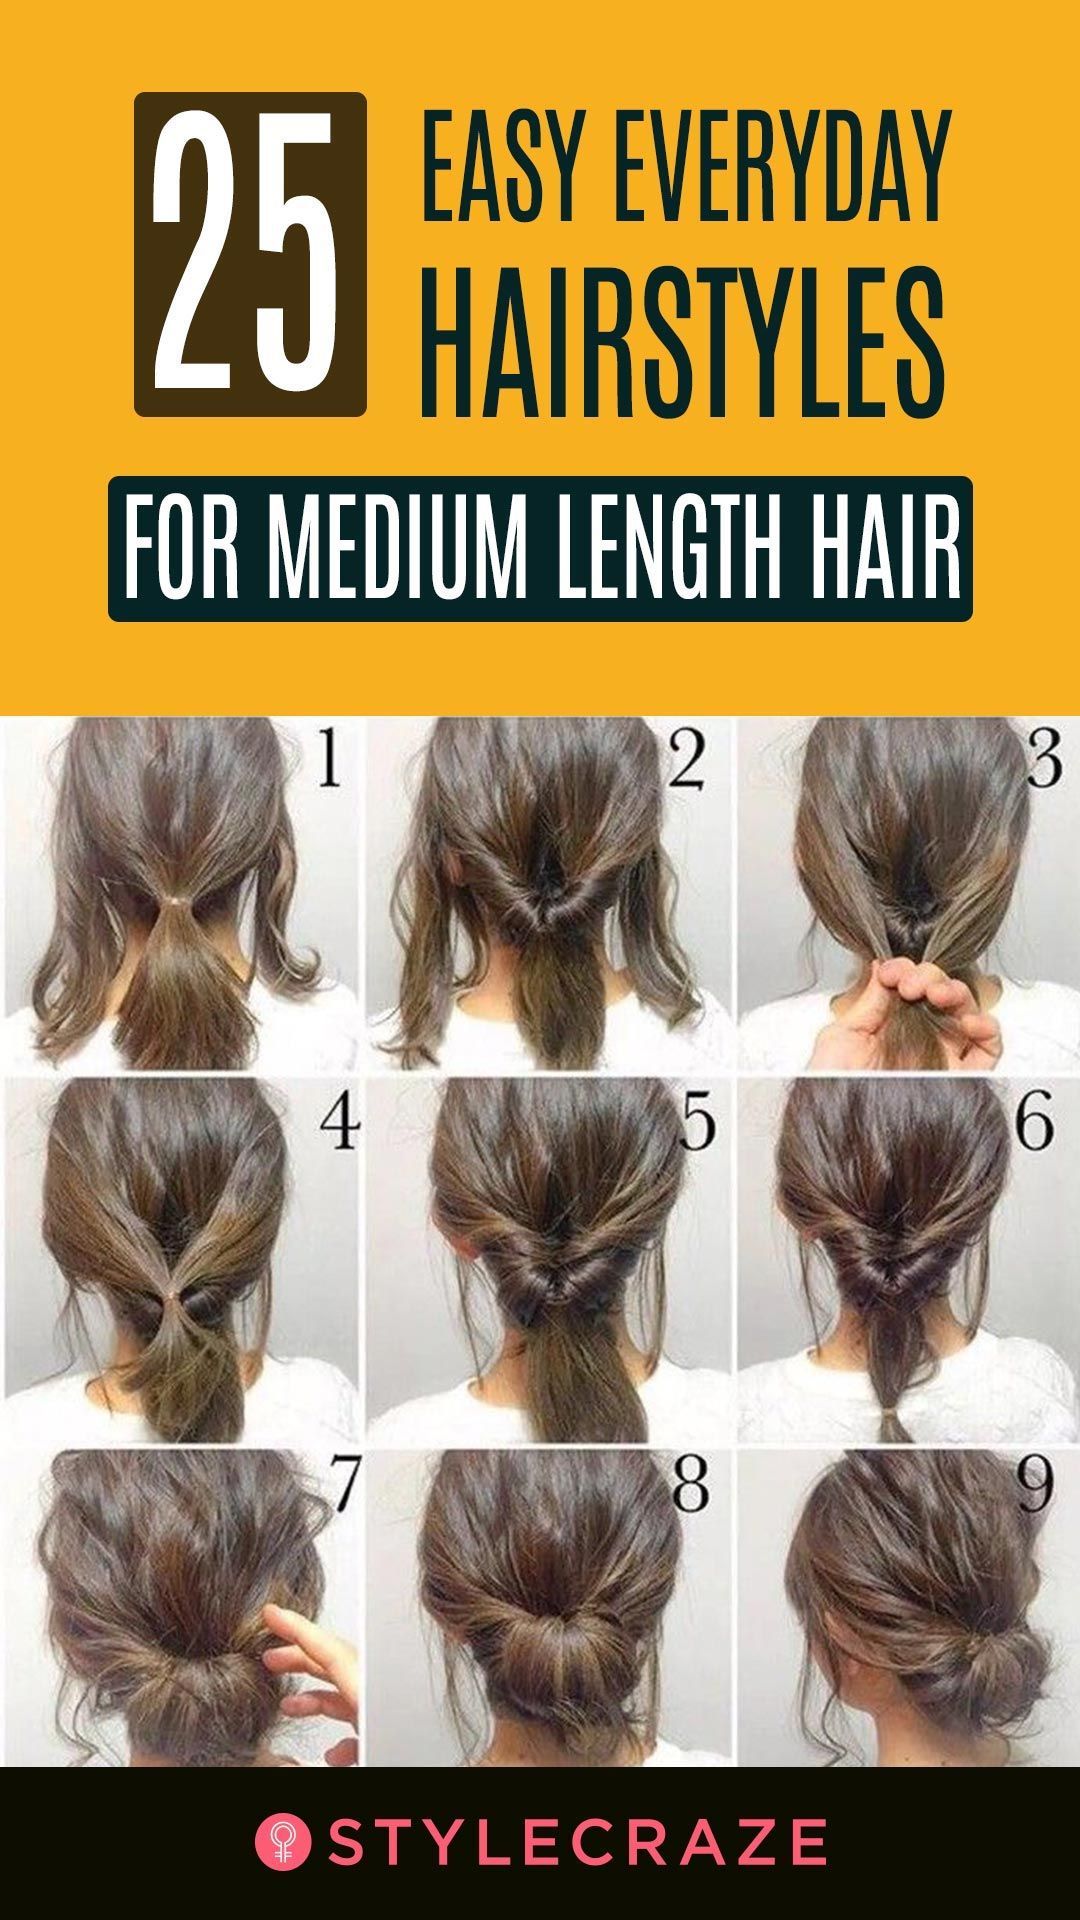 25 Easy Everyday Hairstyles For Medium Length Hair -   16 hairstyles For Medium Length Hair curly ideas